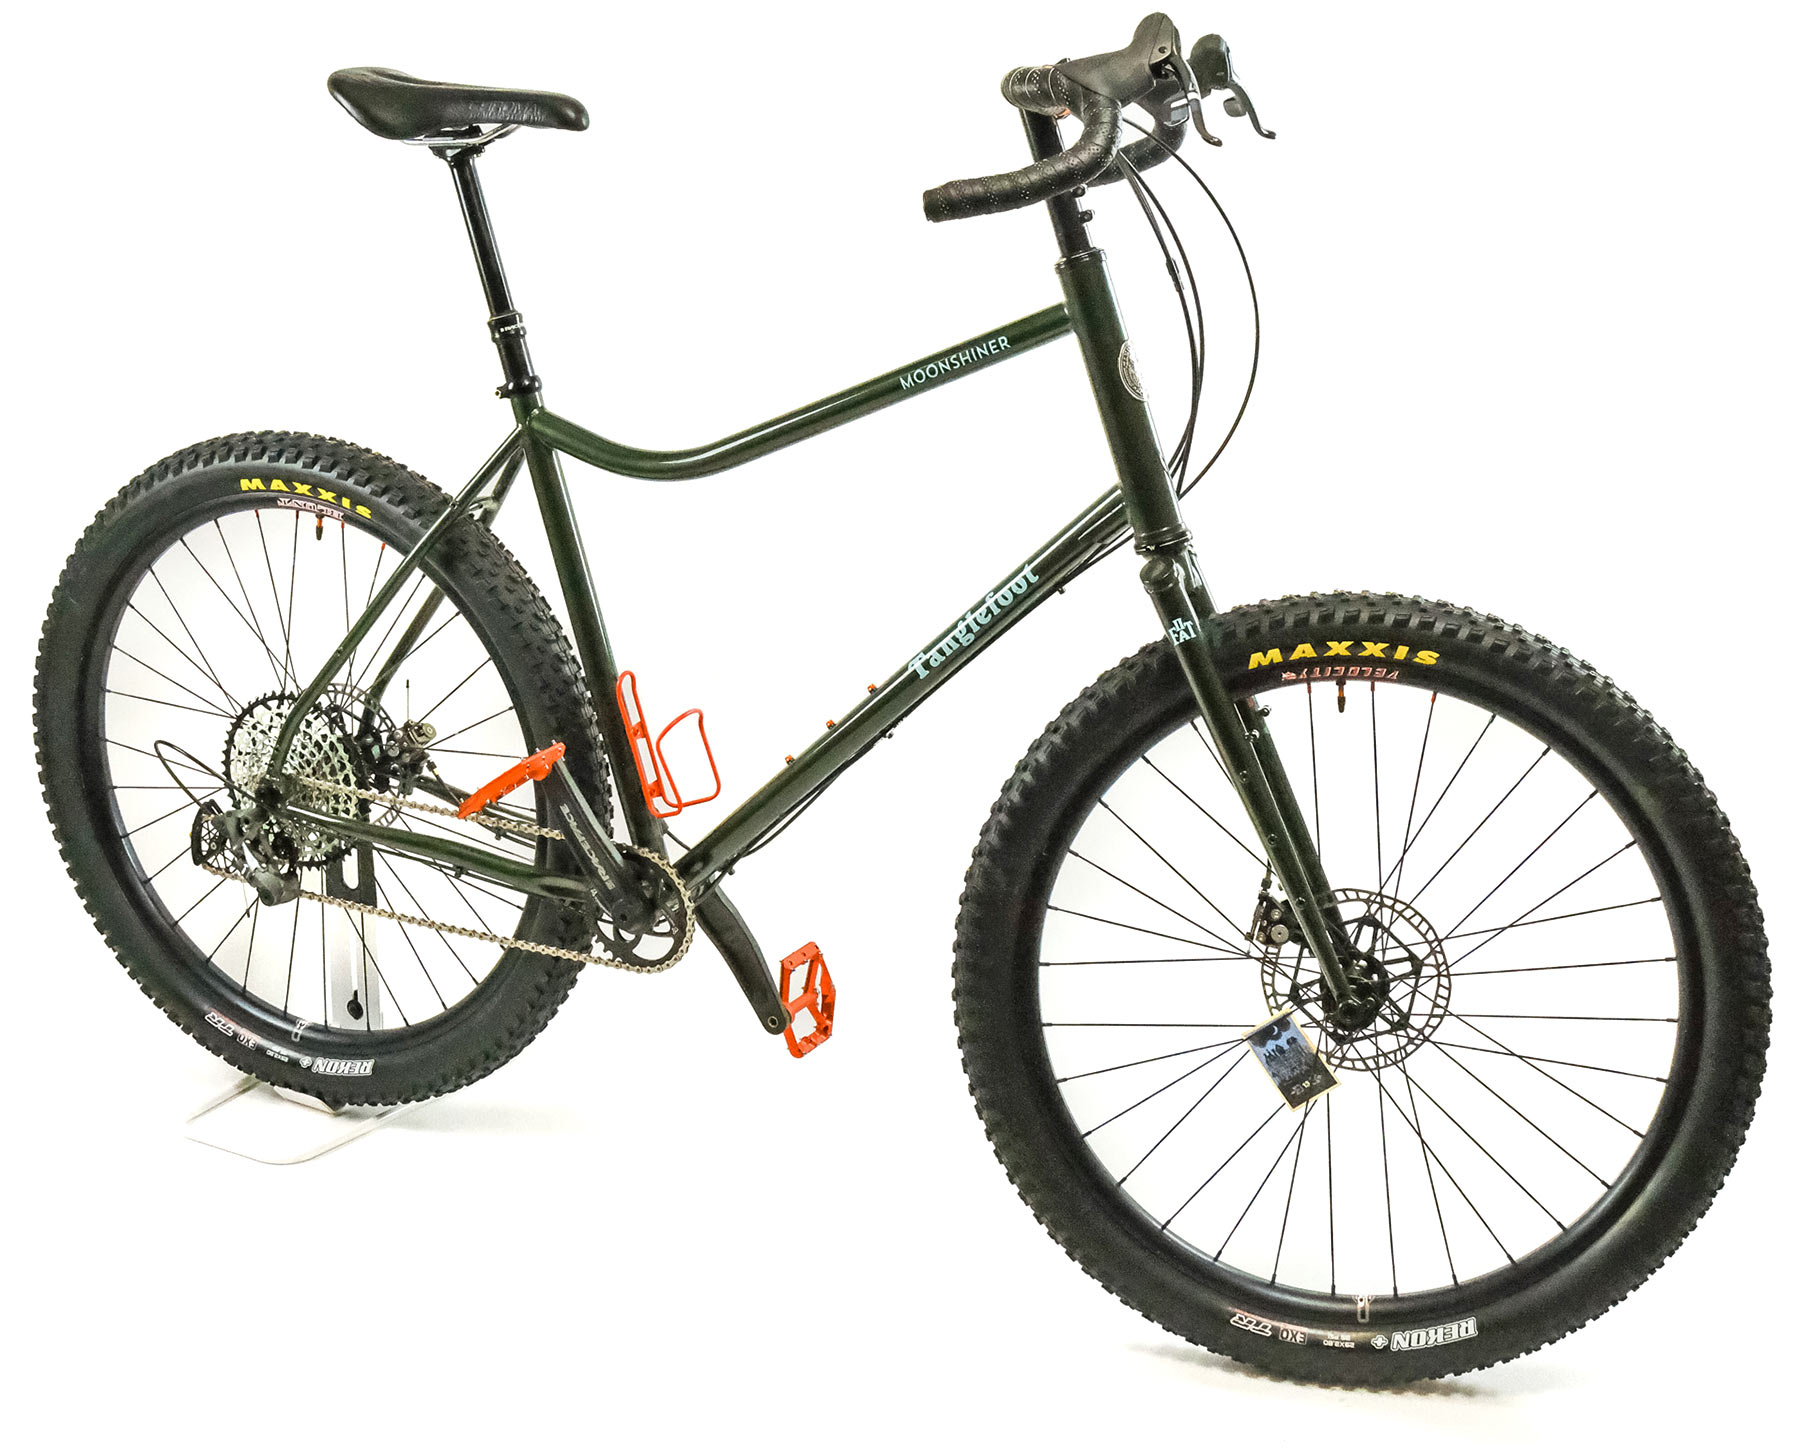 Tanglefoot Moonshiner v2 rigid steel dropbar mountain bike, new in XL front